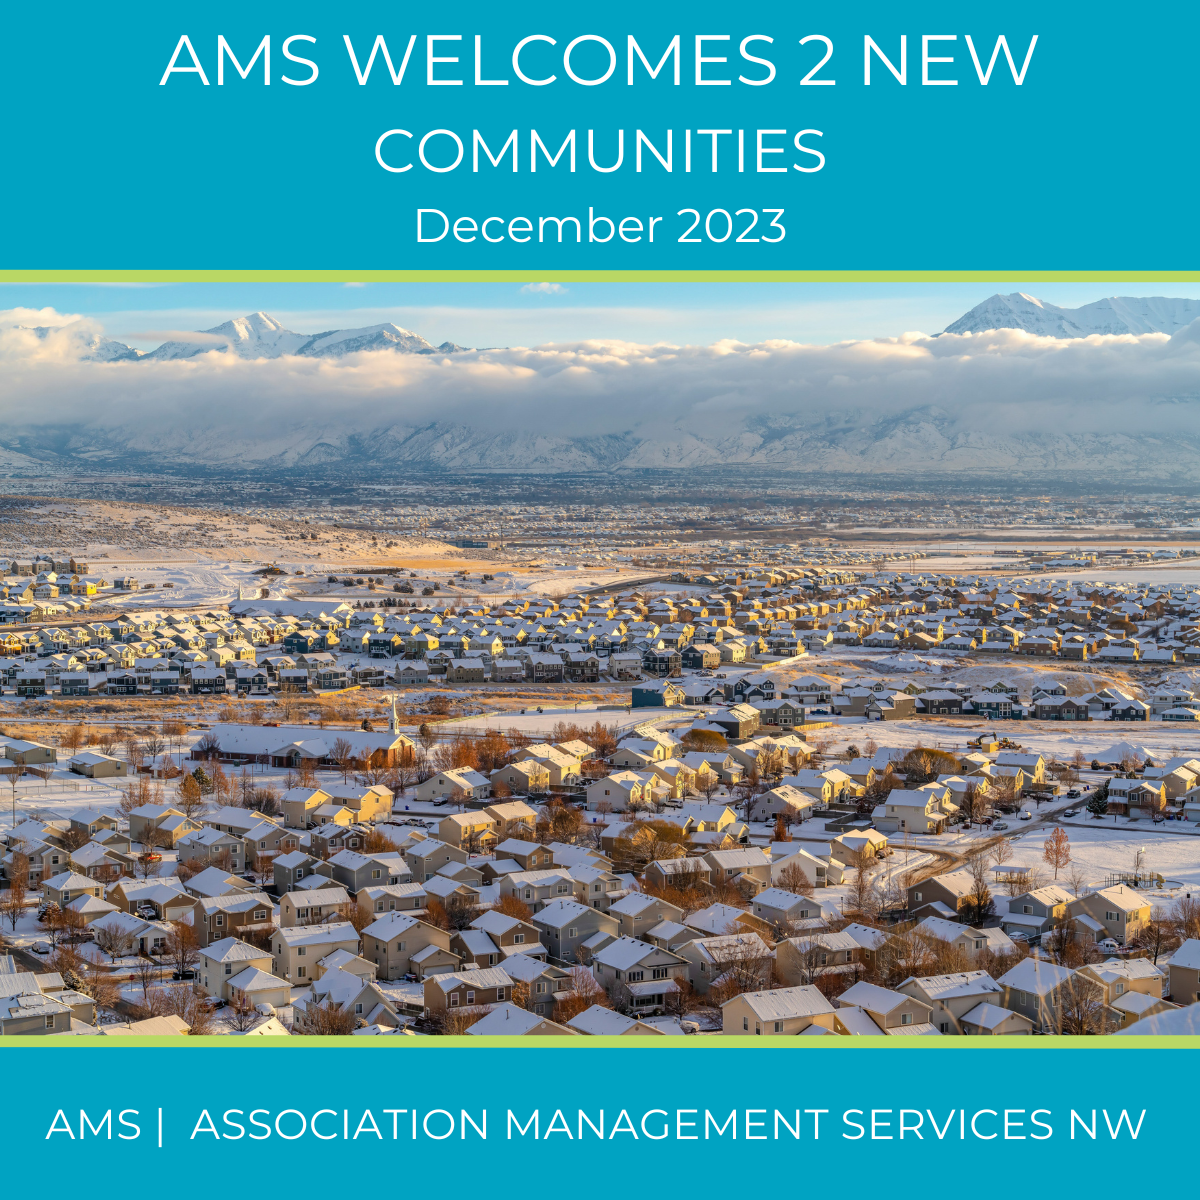 AMS Blog Post Dec 2023 New Comm Featured Image (LinkedIn Post)